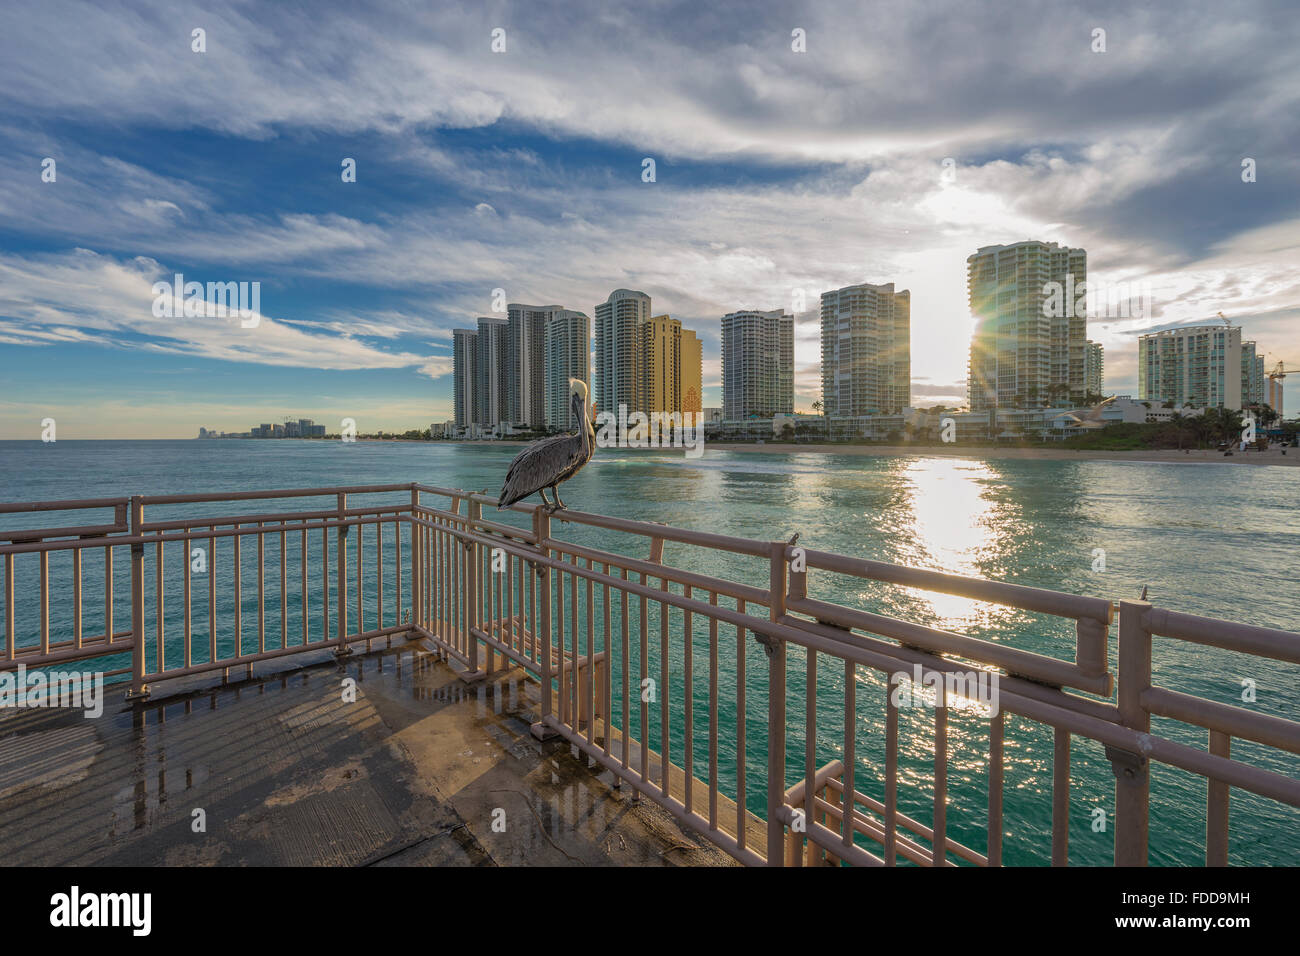 Sunny Isles Beach, Miami, Floride - Pelican dans la pier Banque D'Images